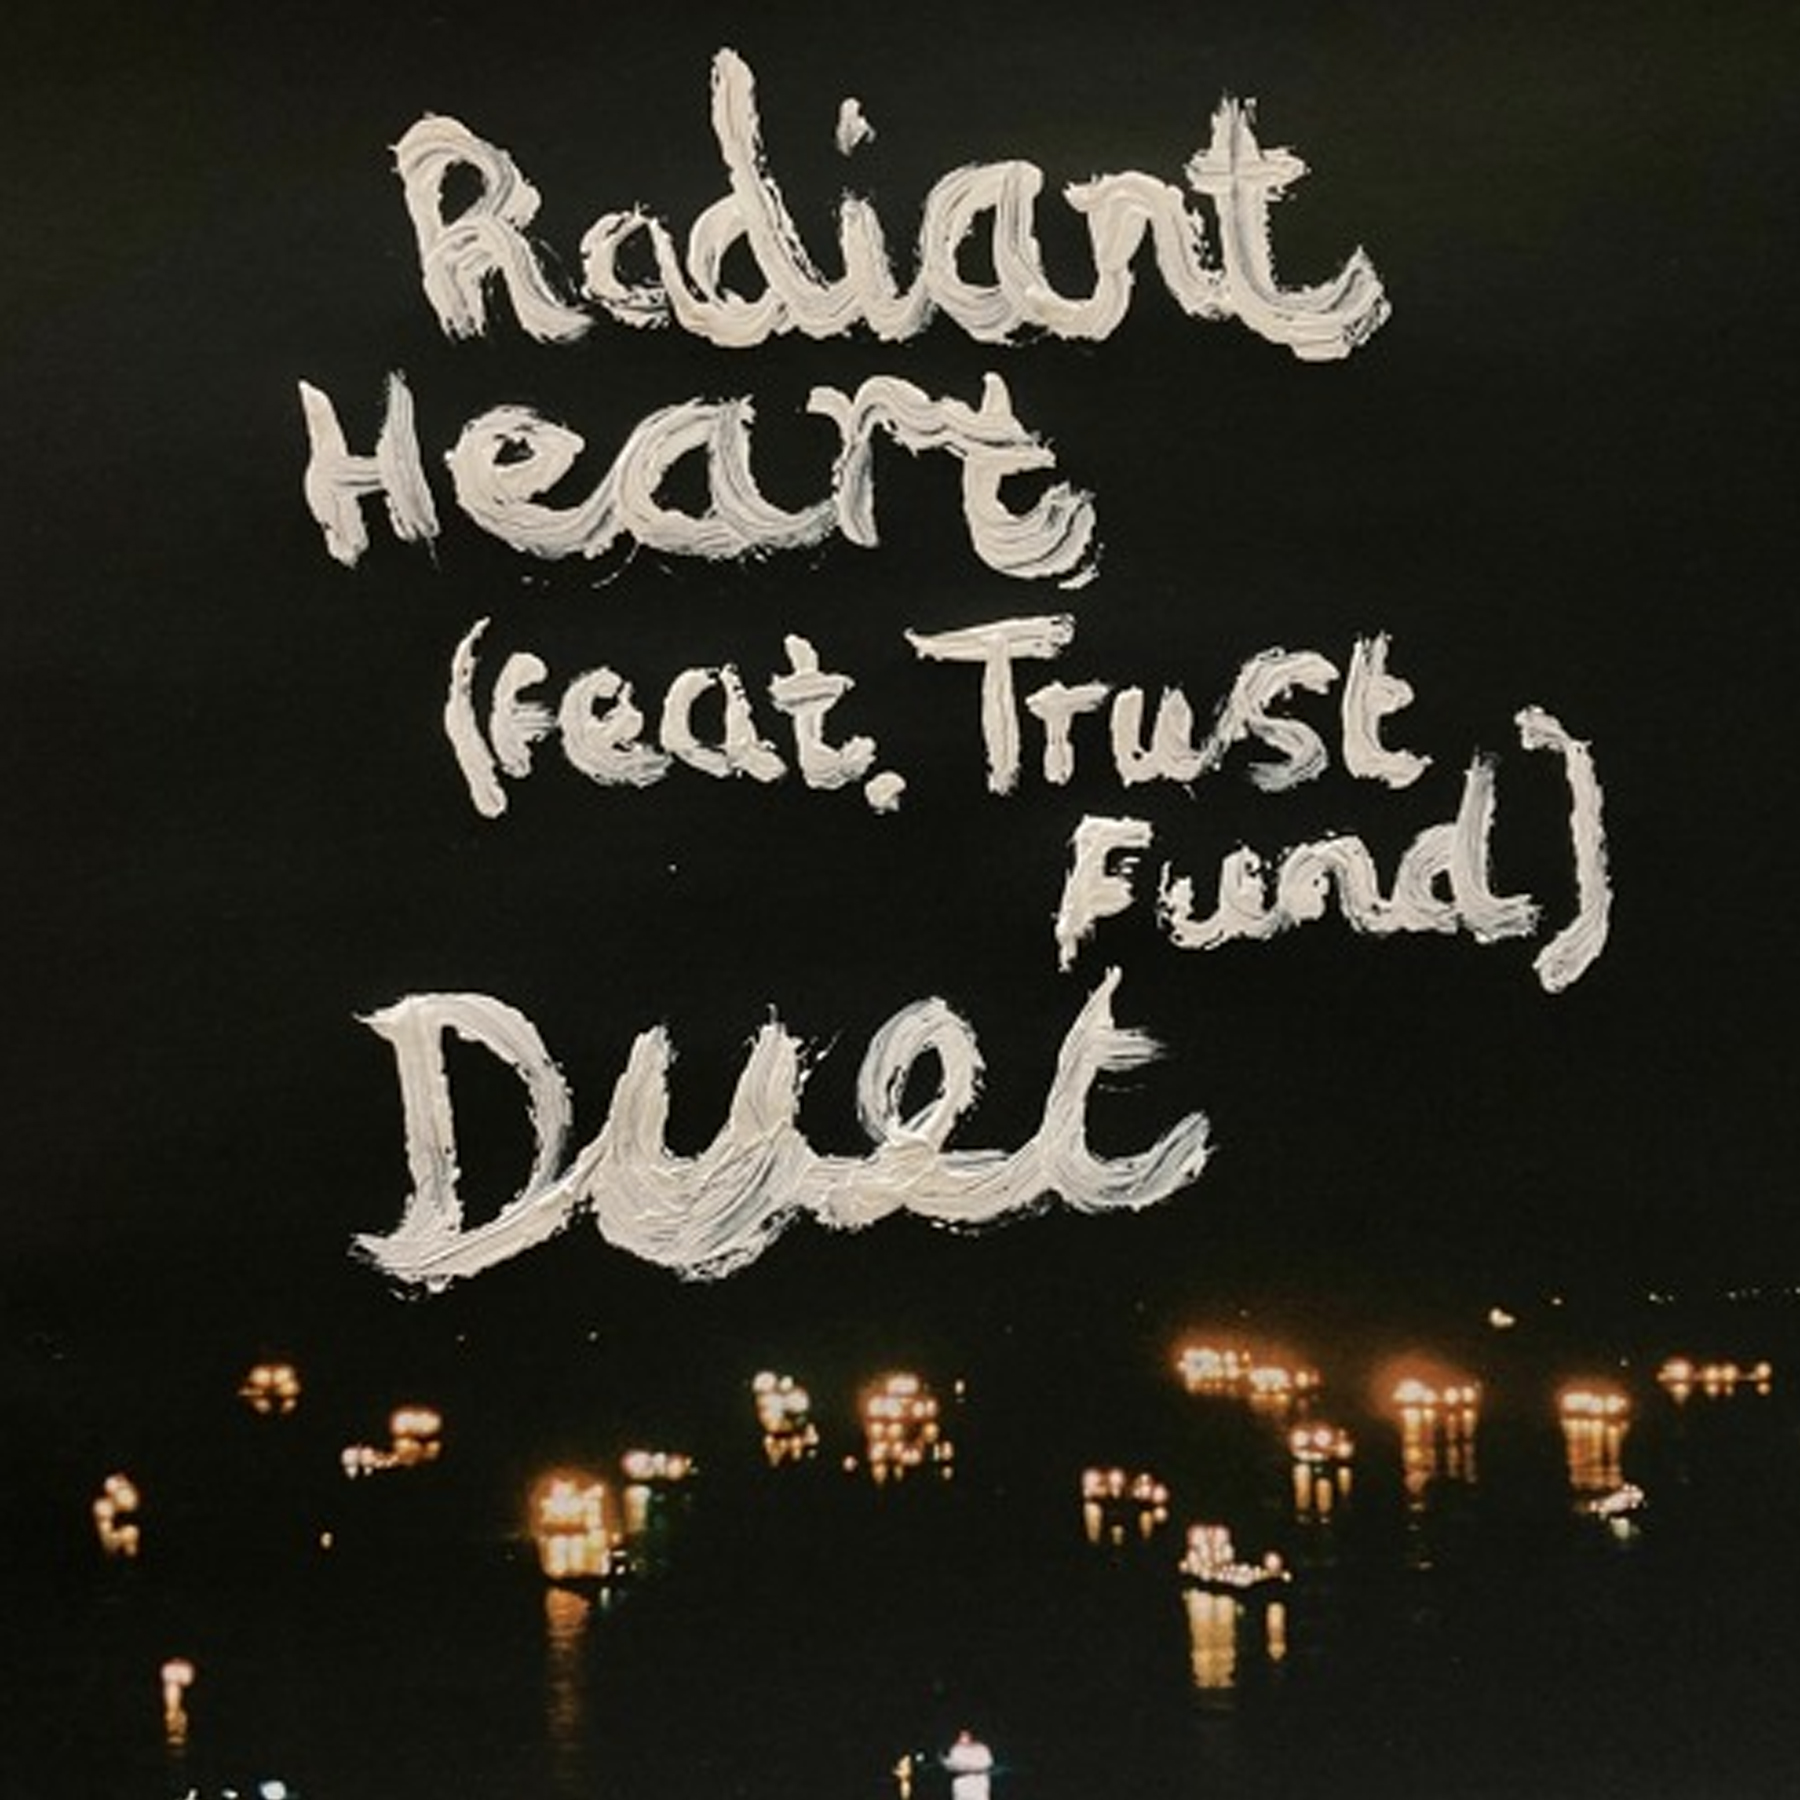 RADIANT HEART FEAT. TRUST FUND – DUET